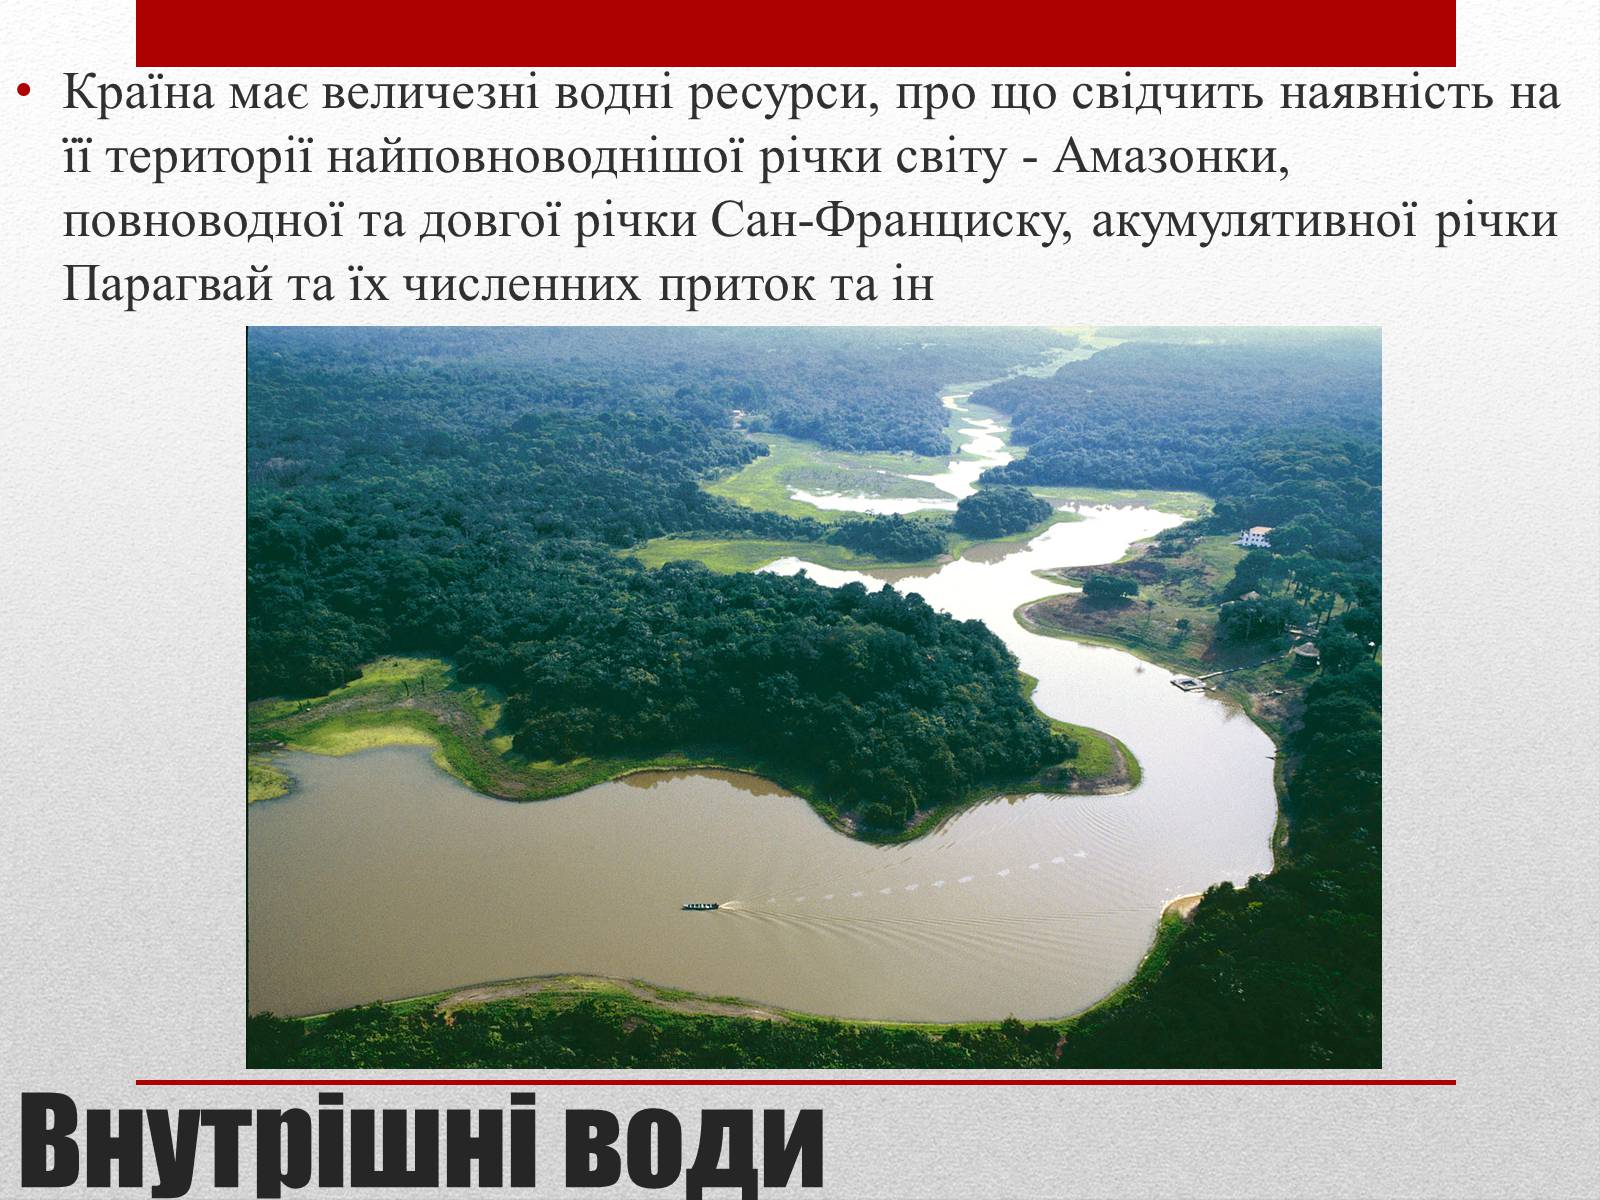 Самая полноводная река в азии. Река Амазонка география. Самая многоводная река Амазонка. Самая многоводная река в мире. Самая полноводная река Сибири.